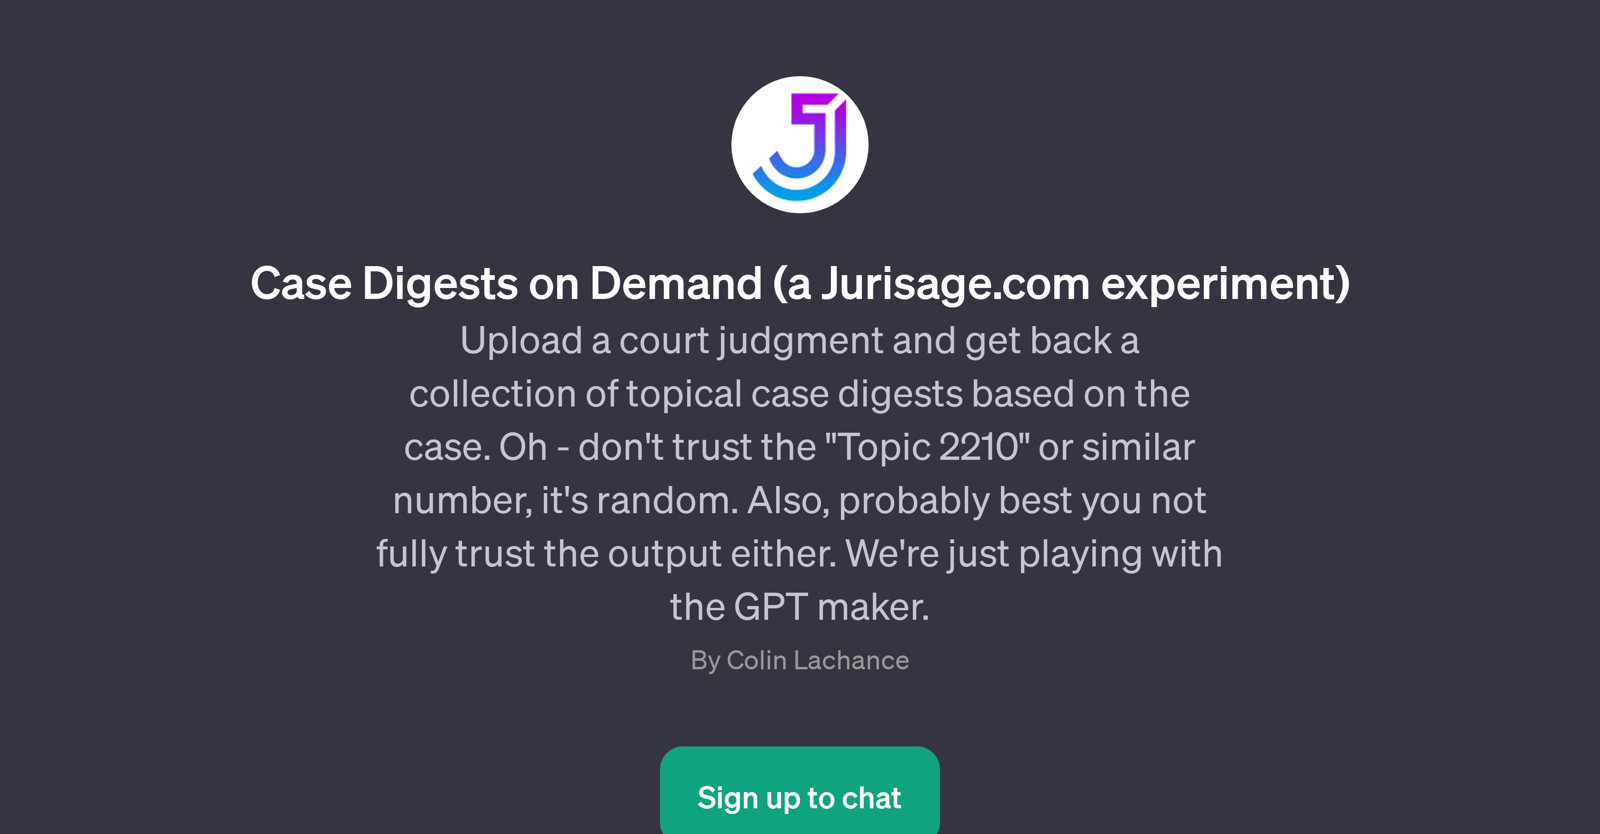 Case Digests on Demand (a Jurisage.com experiment) website